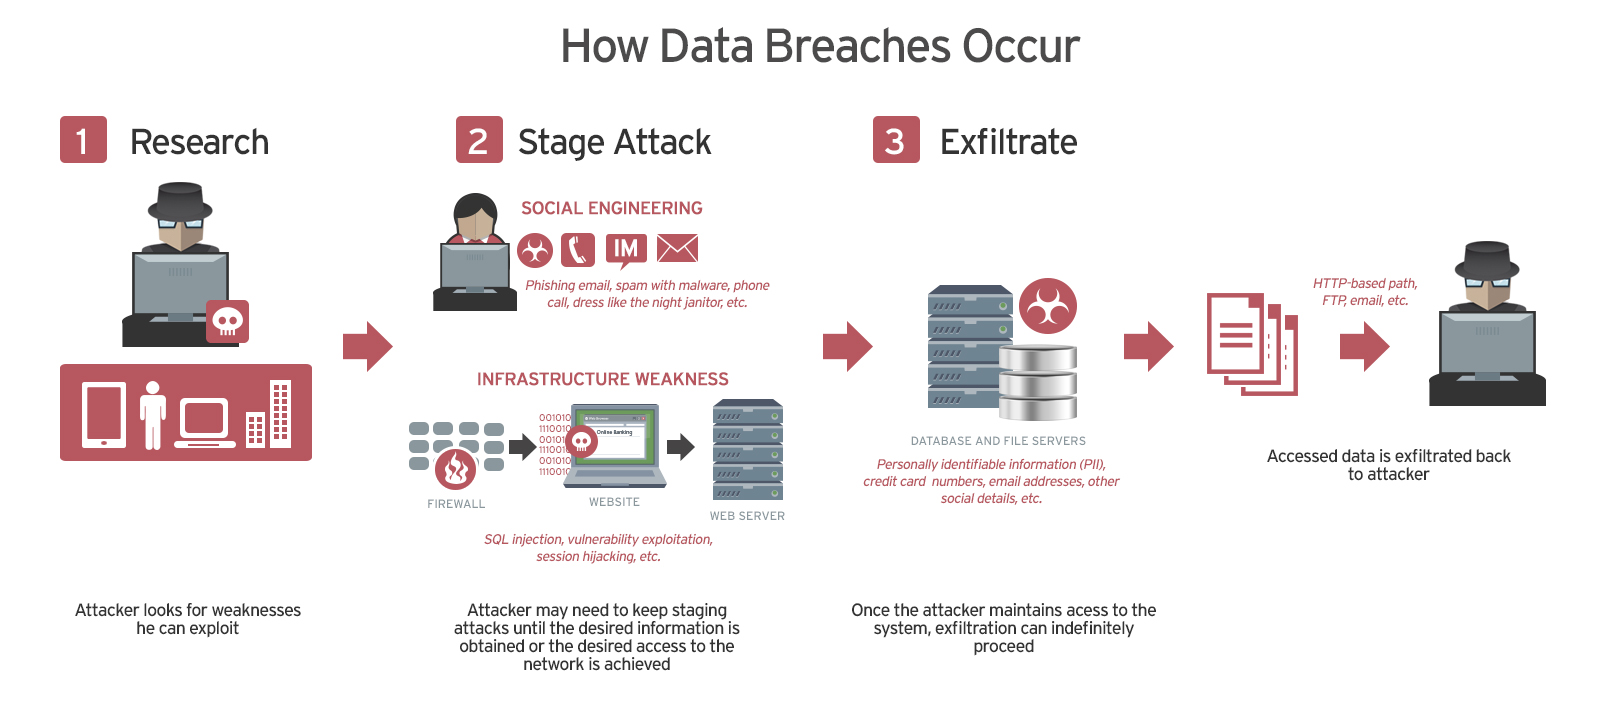 Anatomy of a Data Breach